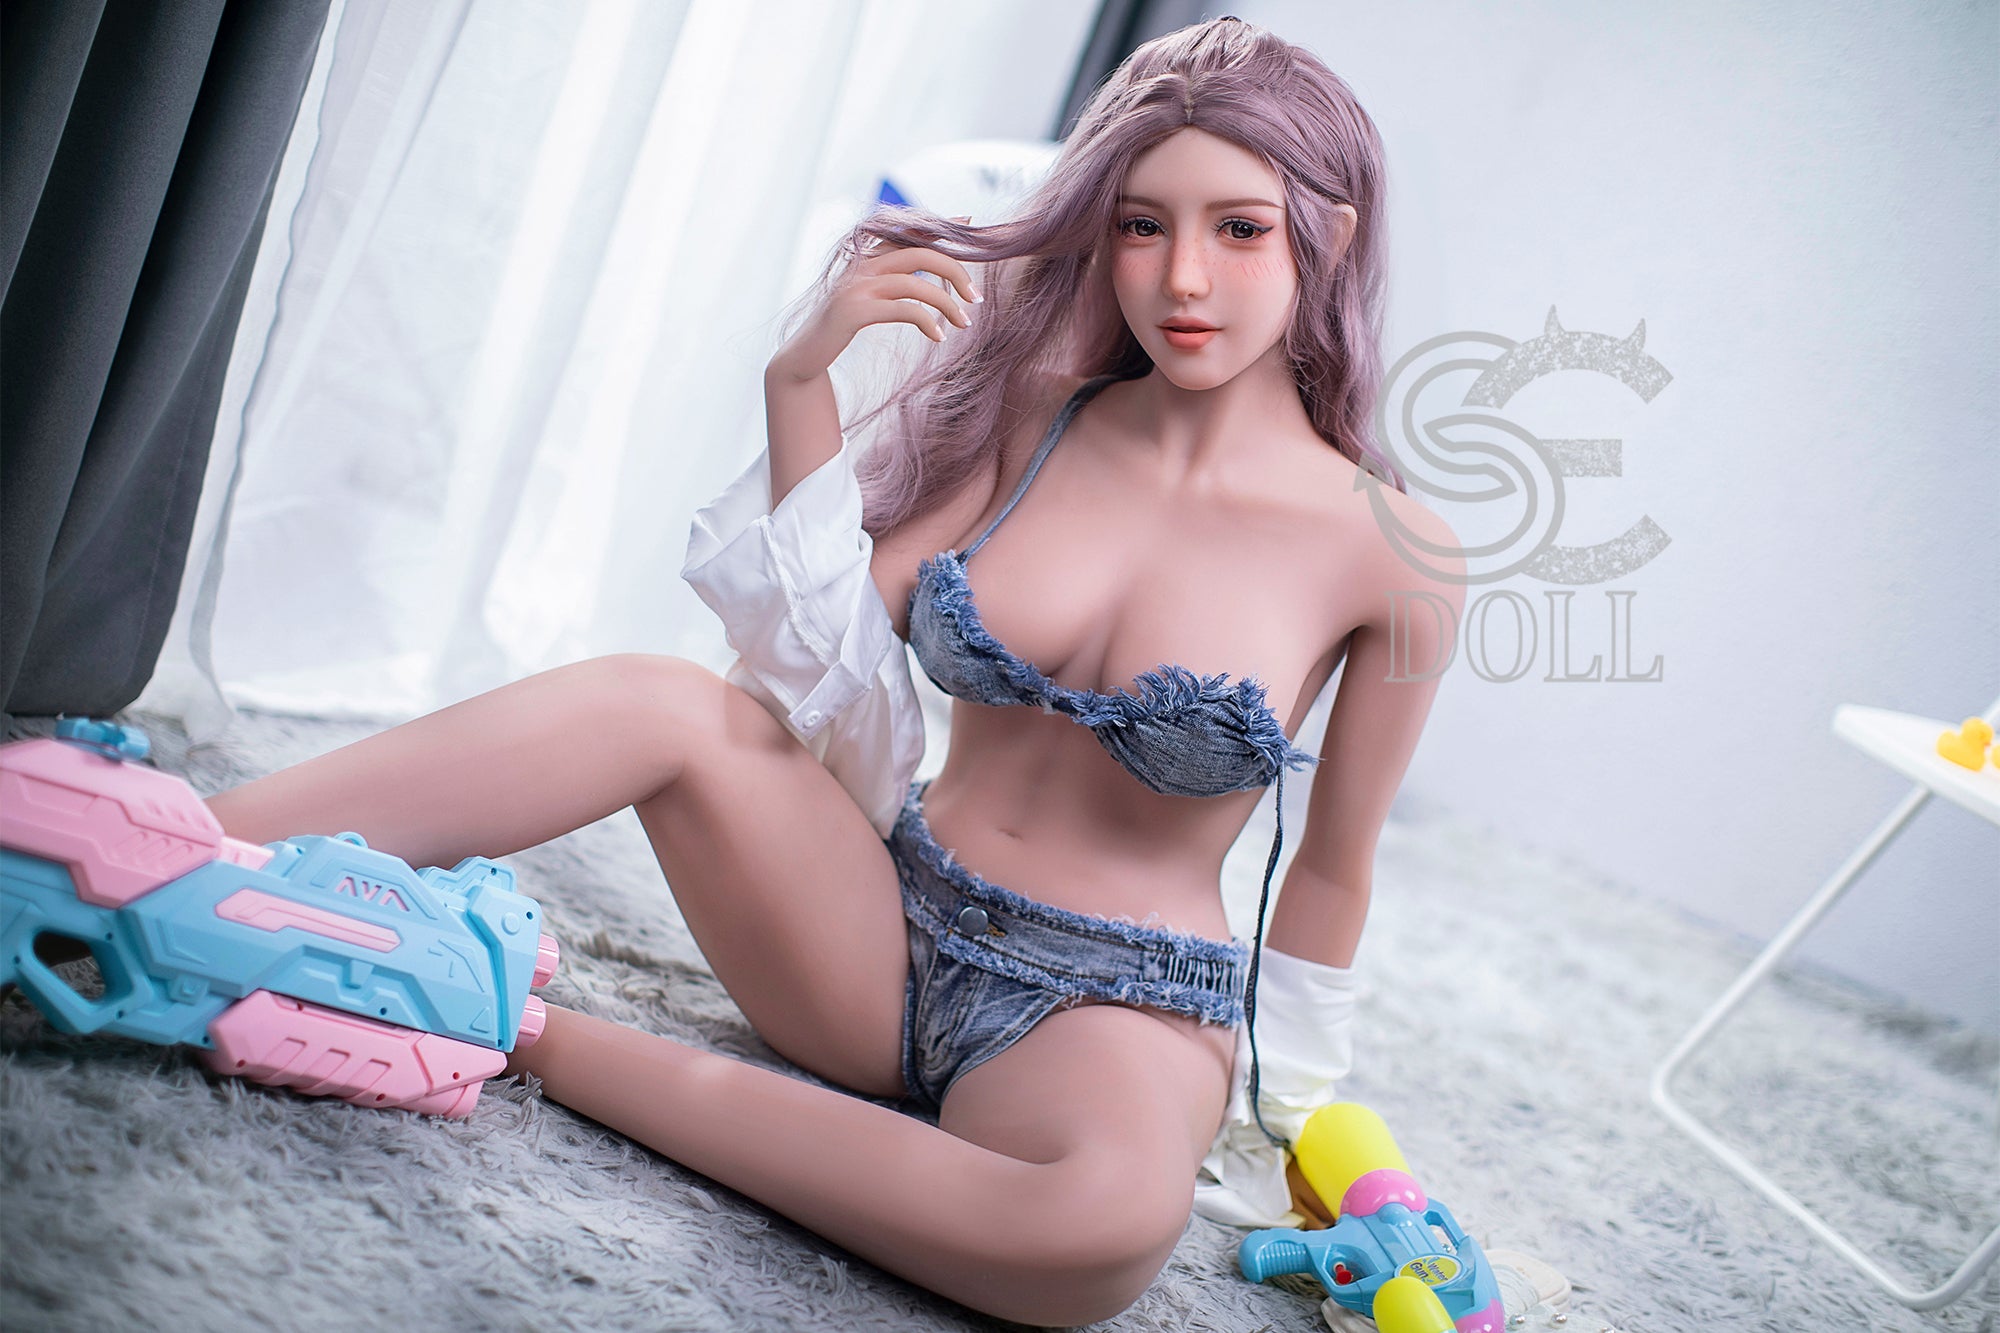 SEDOLL 163 cm E TPE - Yasmin | Buy Sex Dolls at DOLLS ACTUALLY